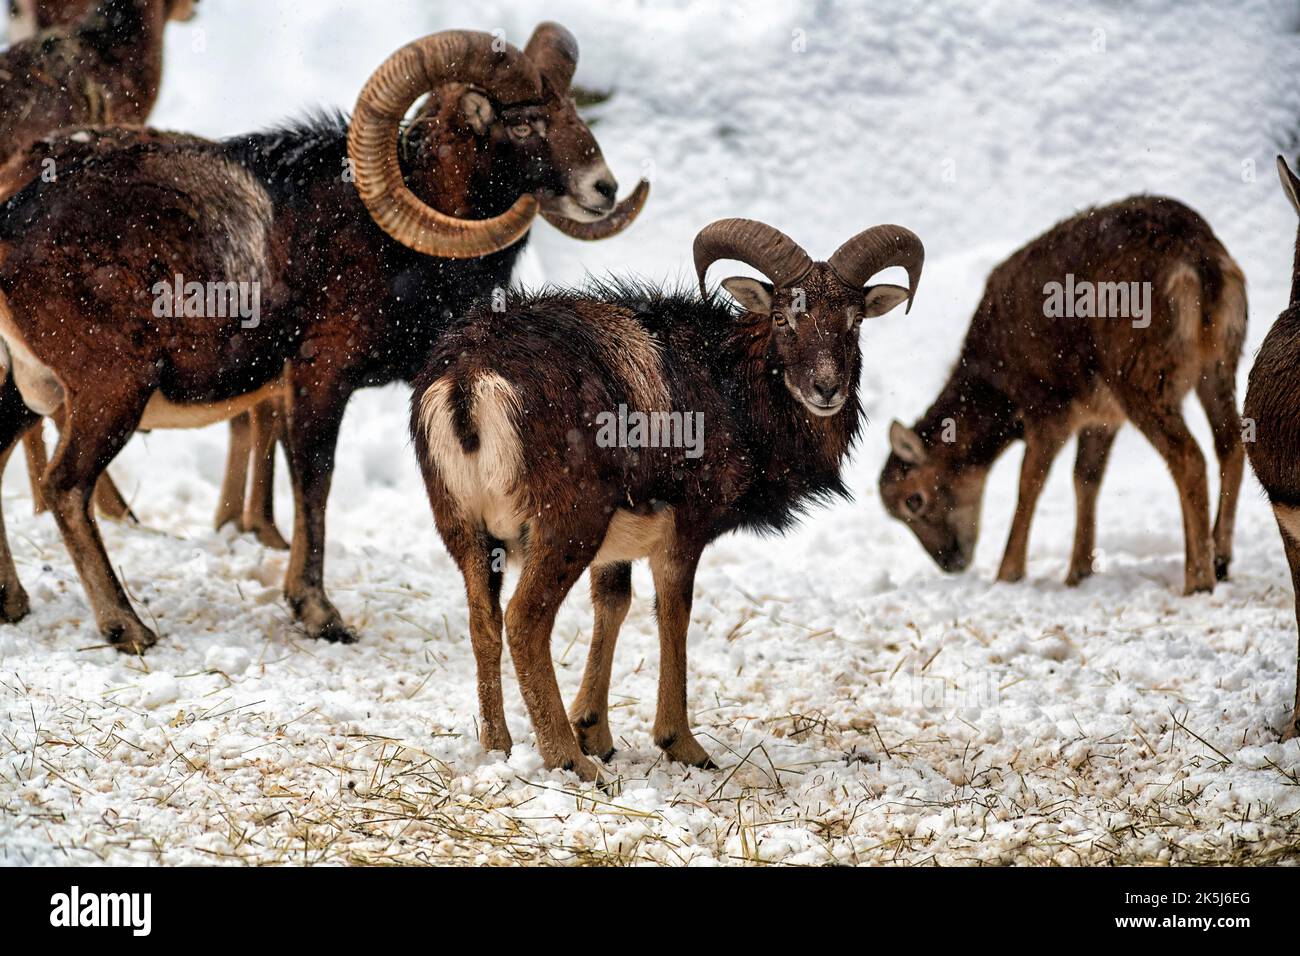 European mouflons (Ovis gmelini musimon) with lamb, mouflon deer in the snow, feeding scene, Neuhaus Wildlife Park in winter, Neuhaus im Solling Stock Photo